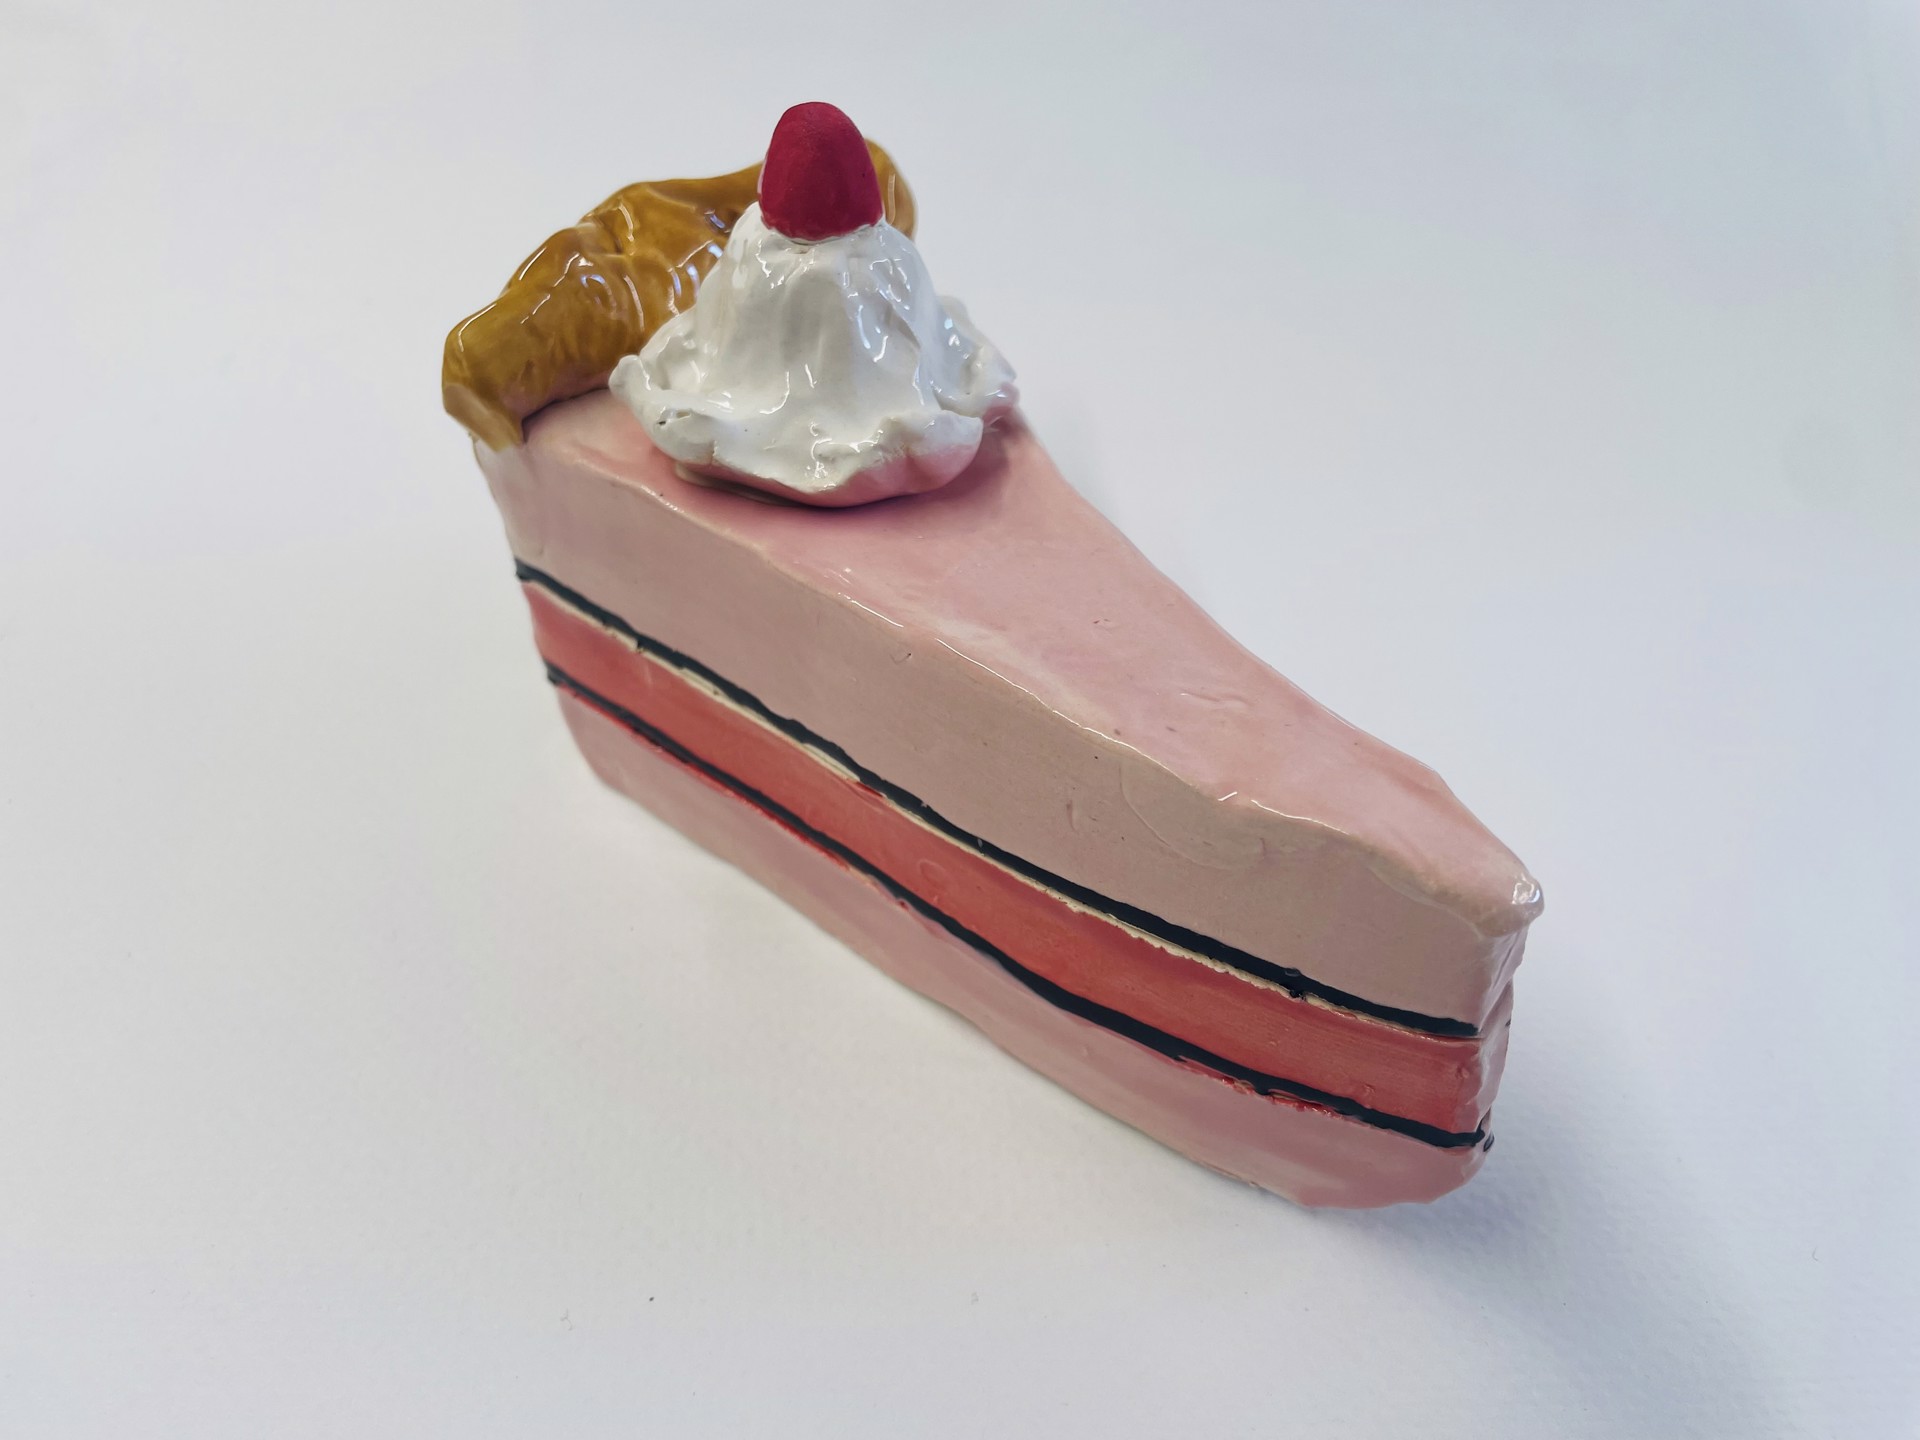 FFW Cake Slice 22 by Sarah Hummel Jones